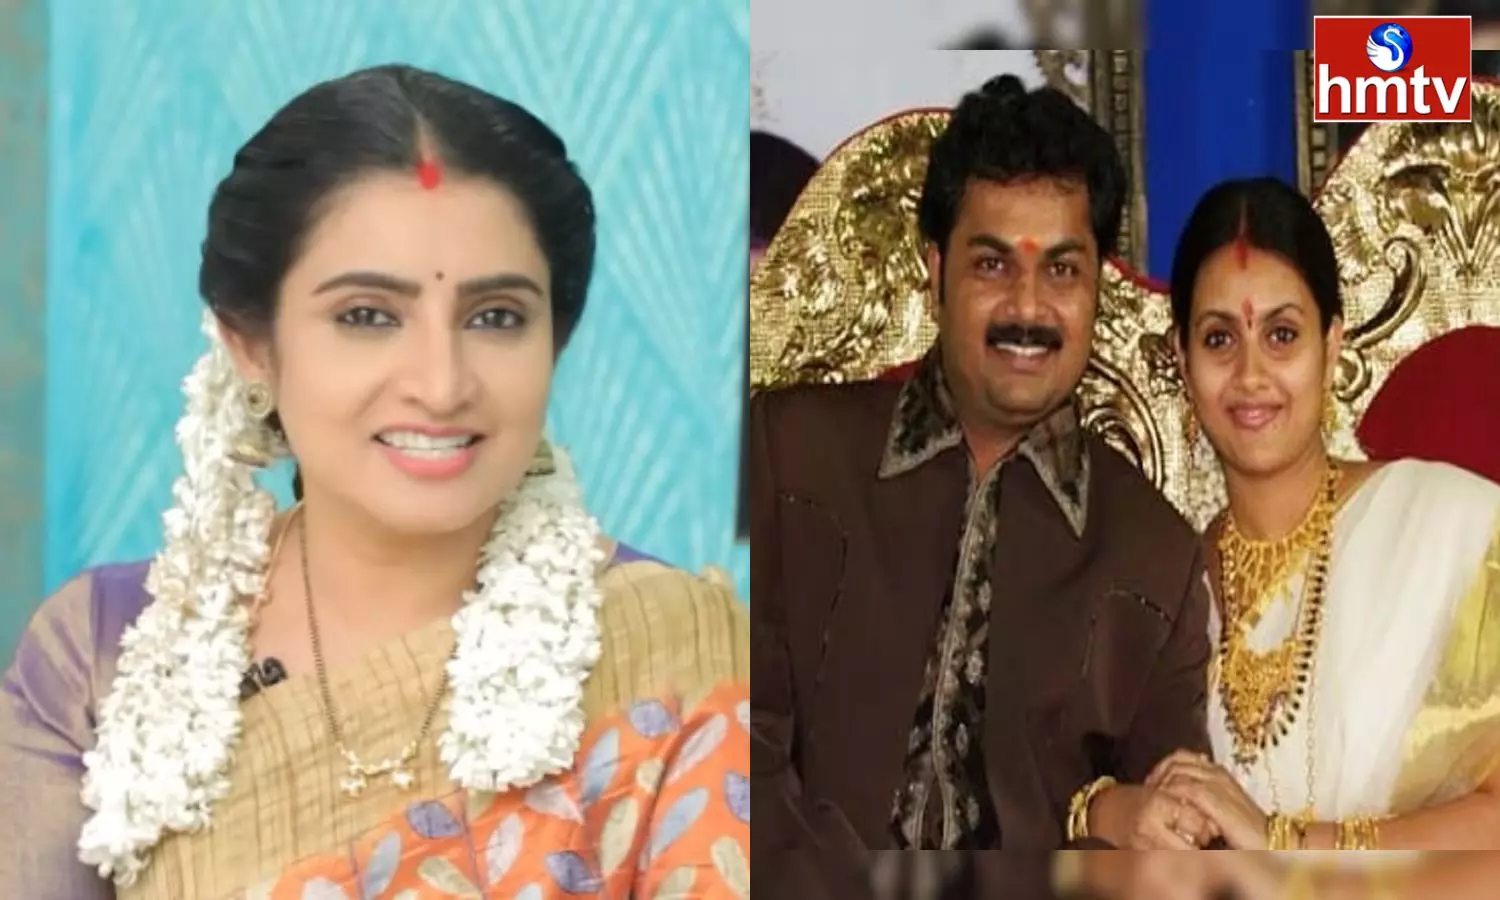 Surya Kiran and Kalyani Divorce With Huge Financial Problems Says Actor Sujitha